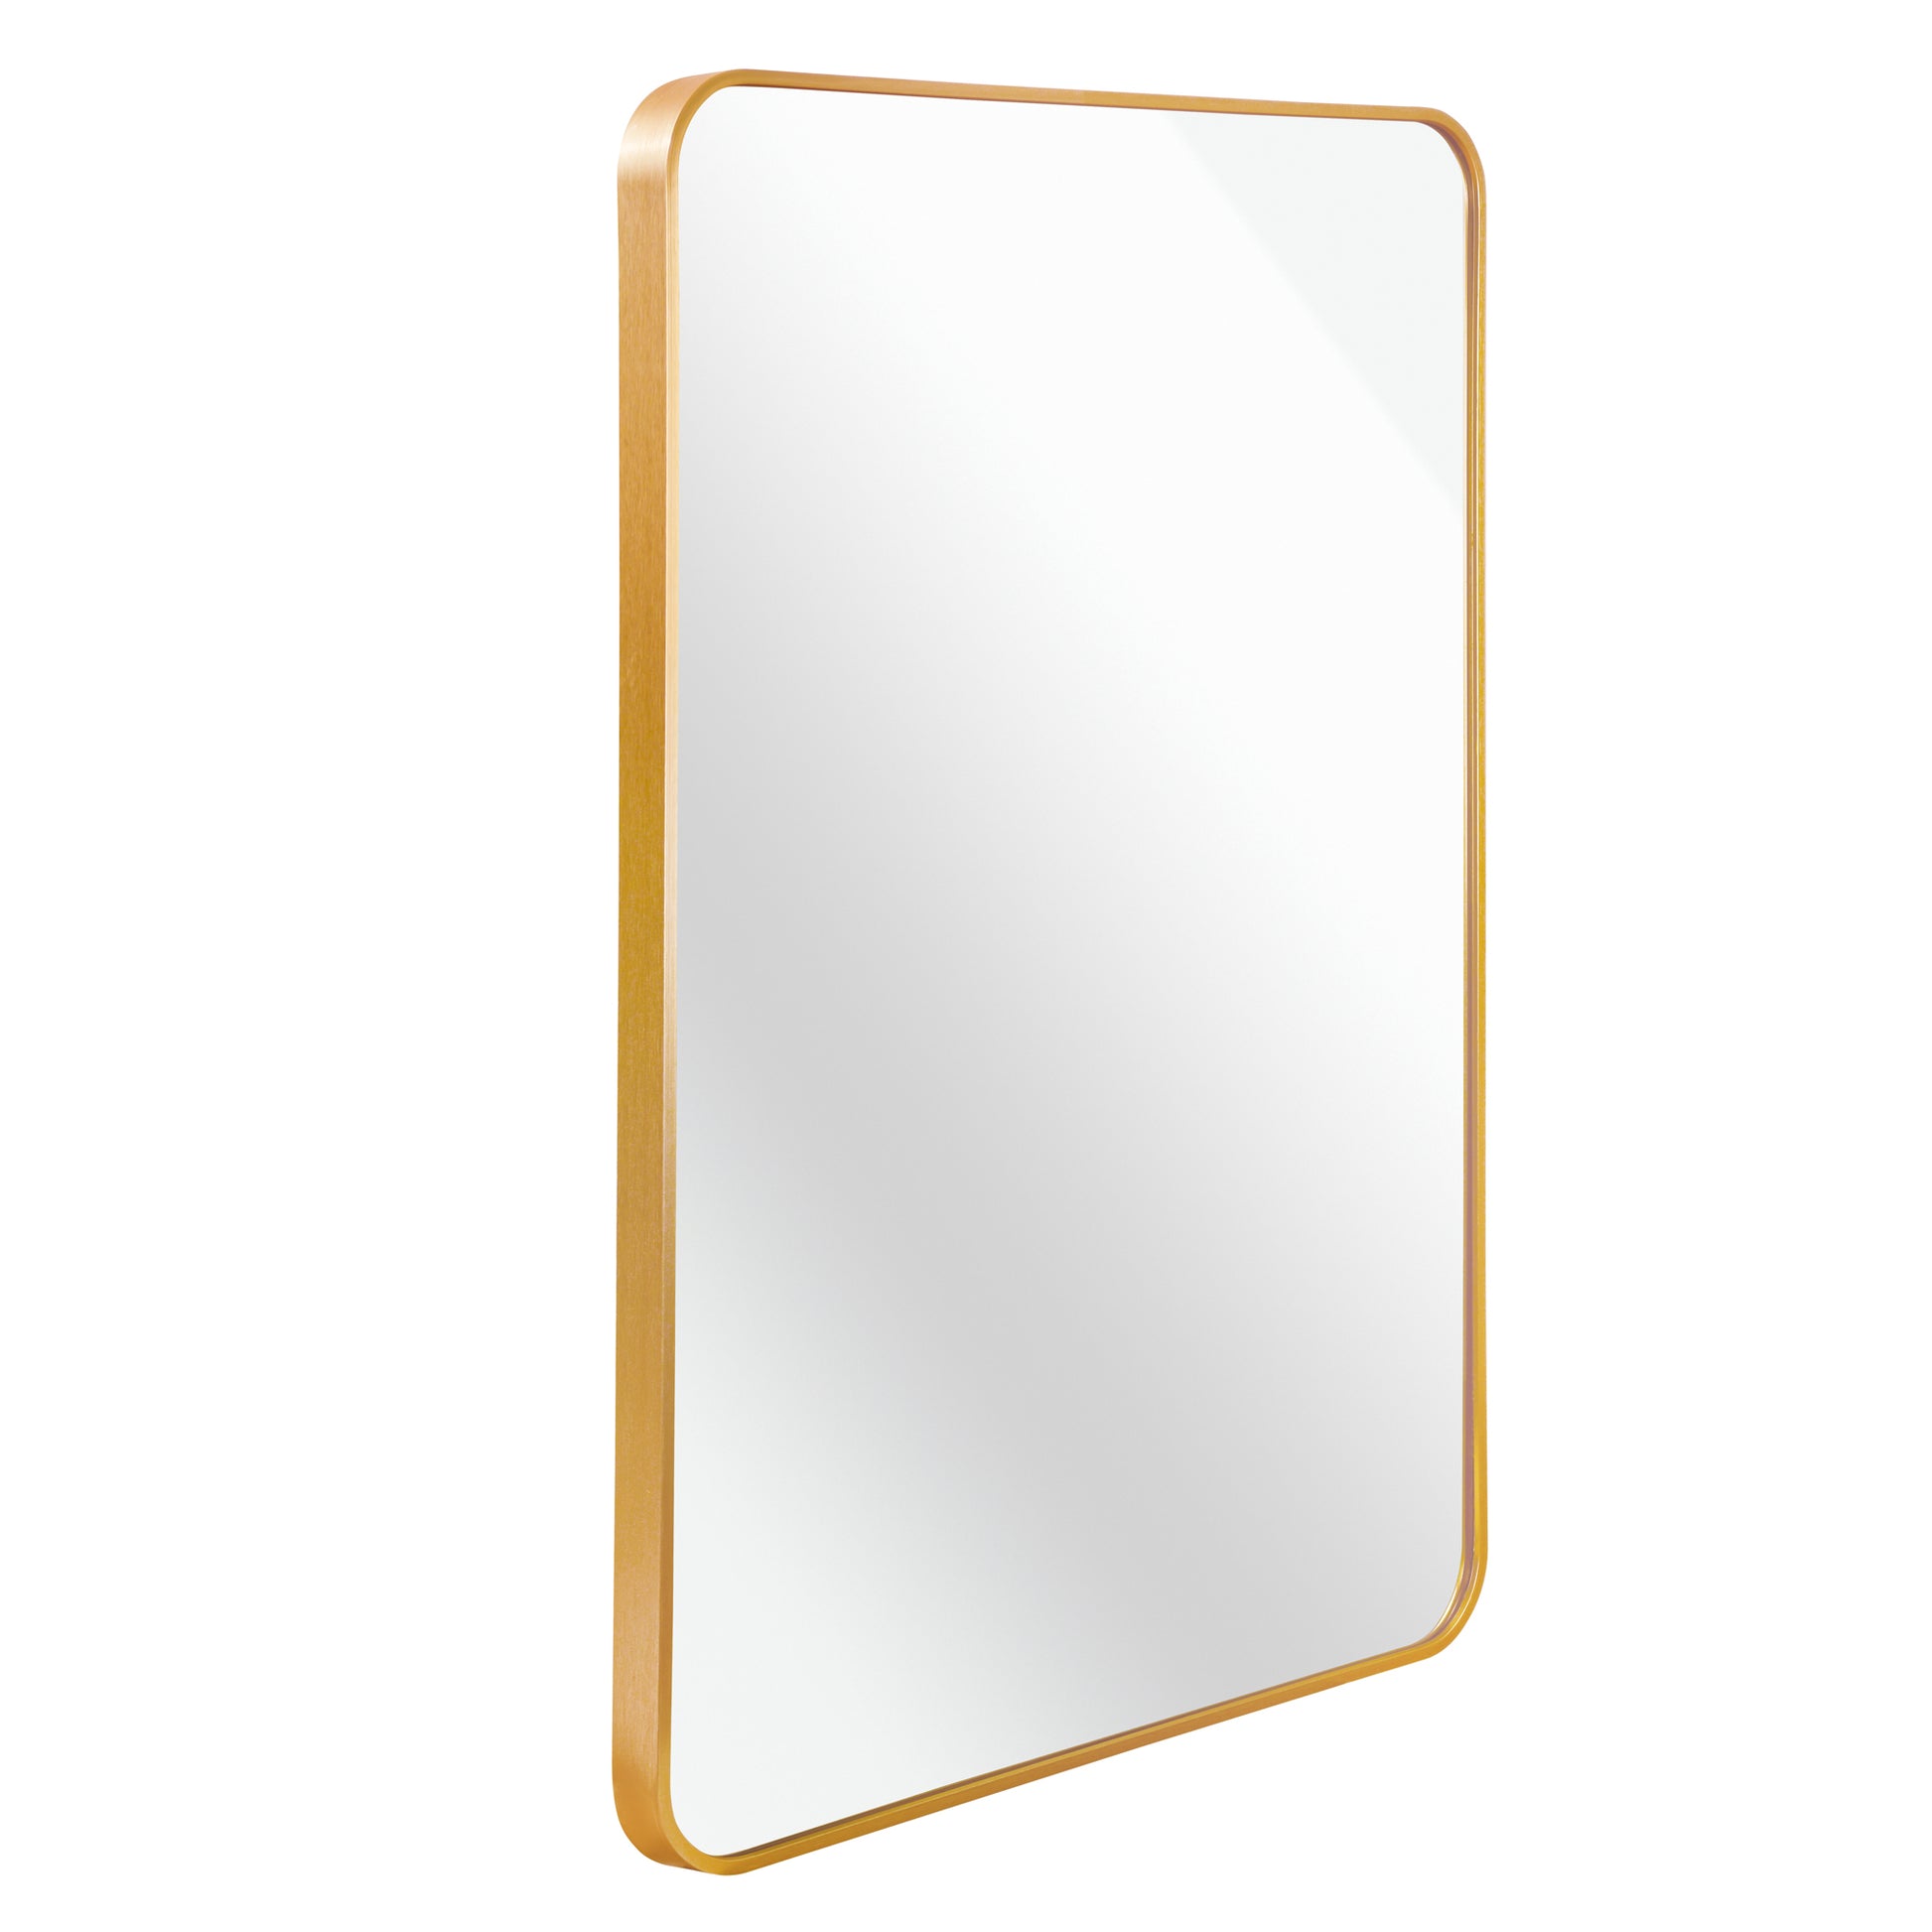 Gold 24 "x32" Rectangular Bathroom Wall Mirror gold-classic-mdf+glass-aluminium alloy